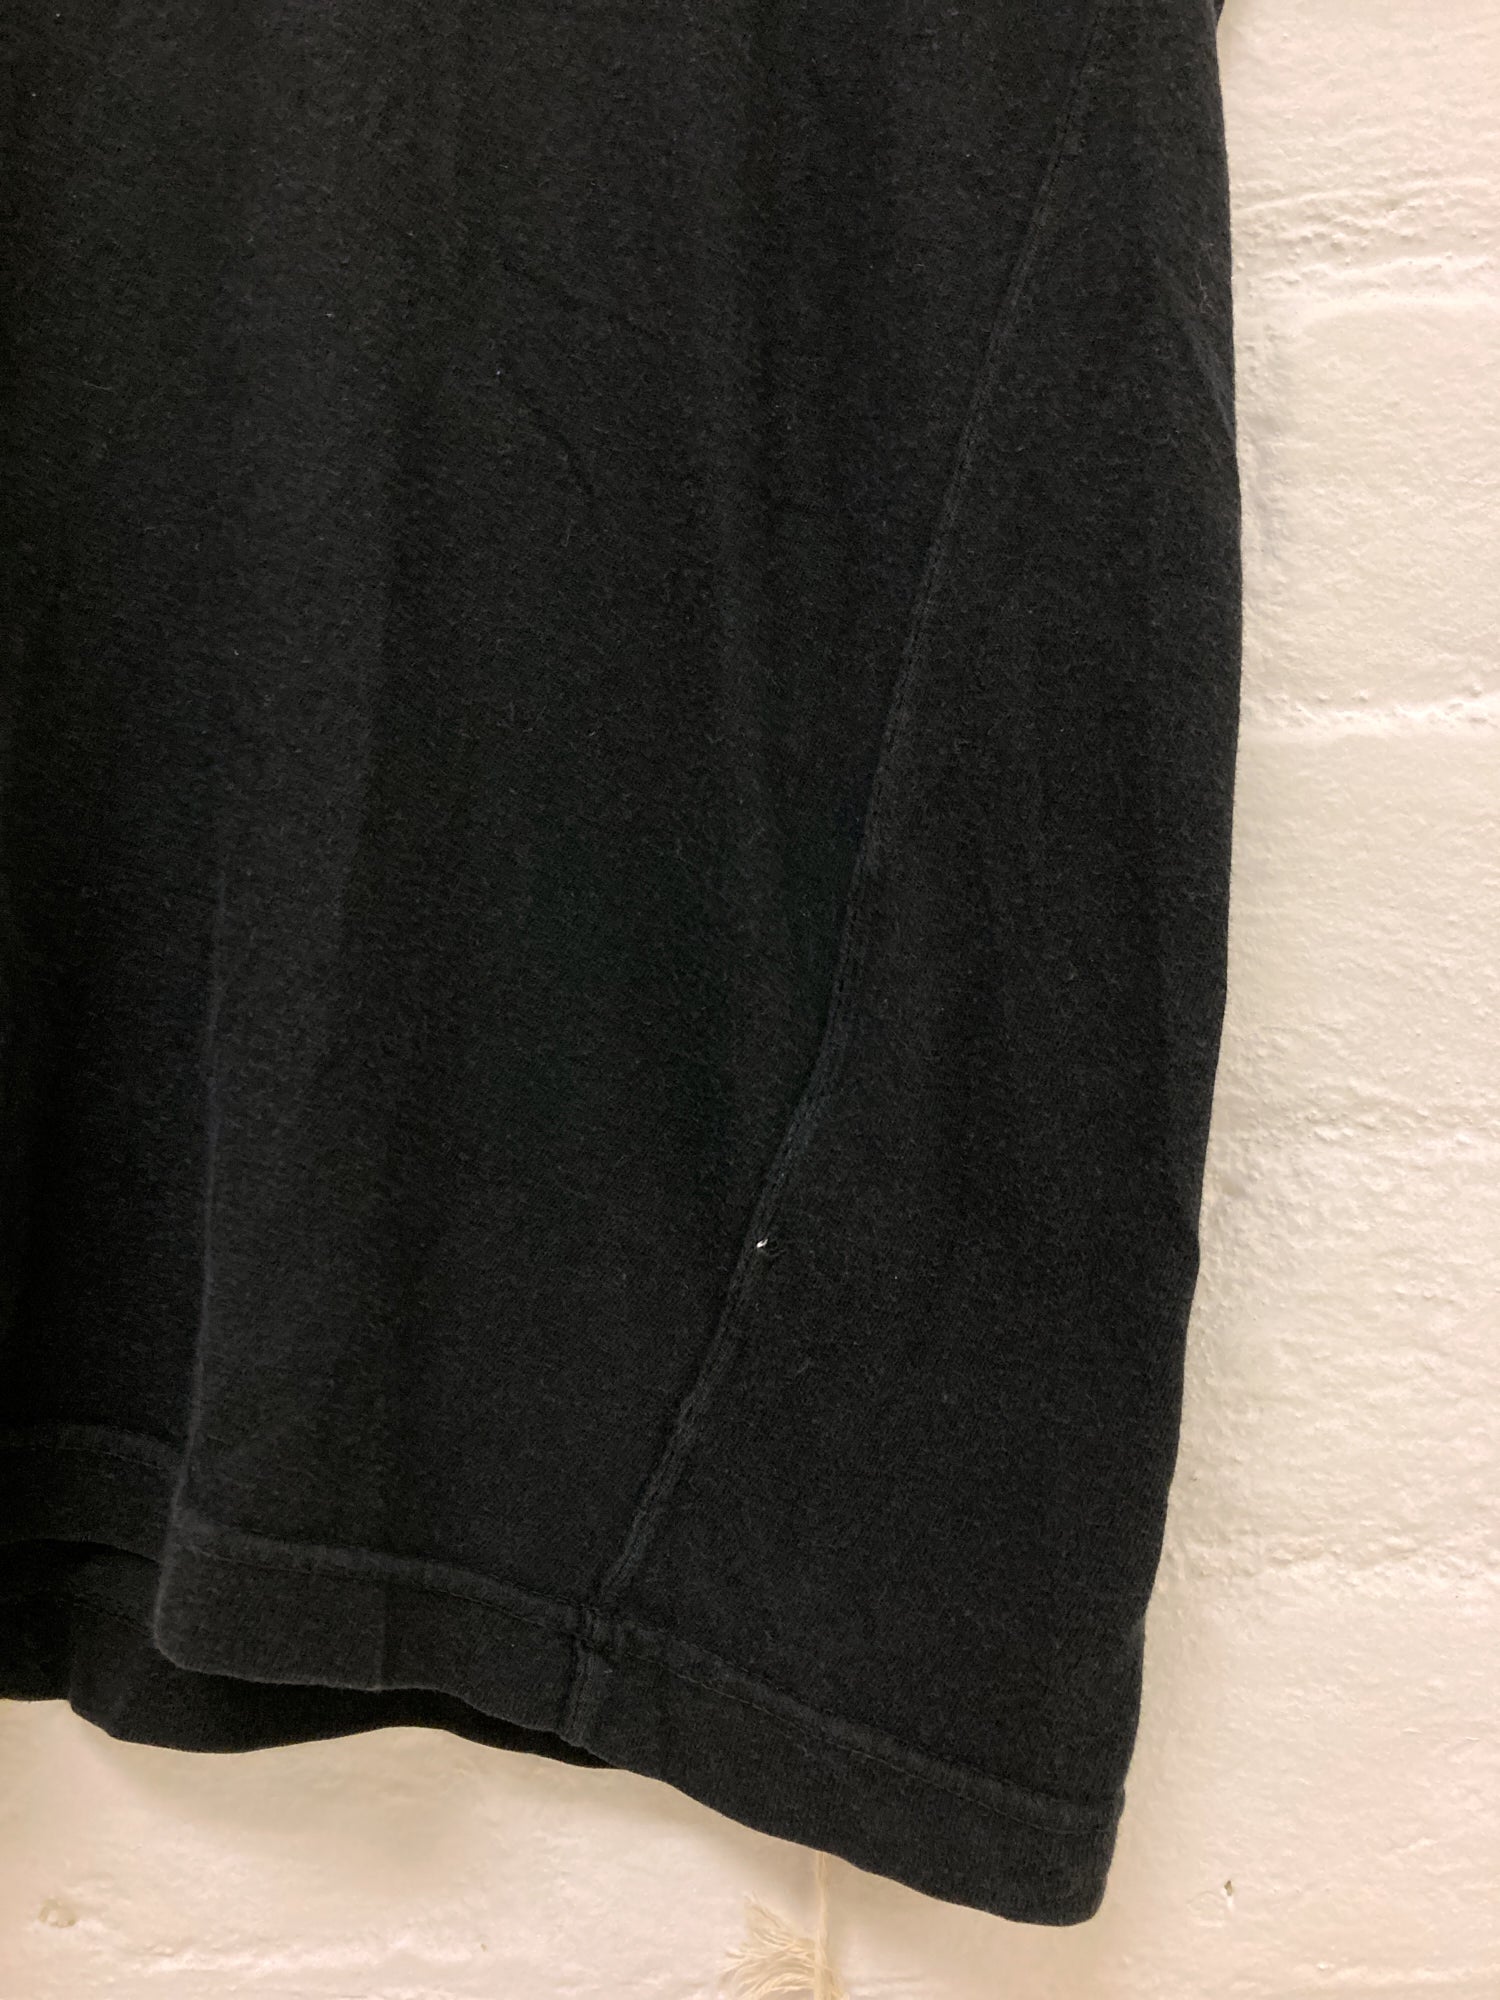 Comme des Garcons 1980s faded black cotton jersey 'CDG JAPAN' back print tshirt